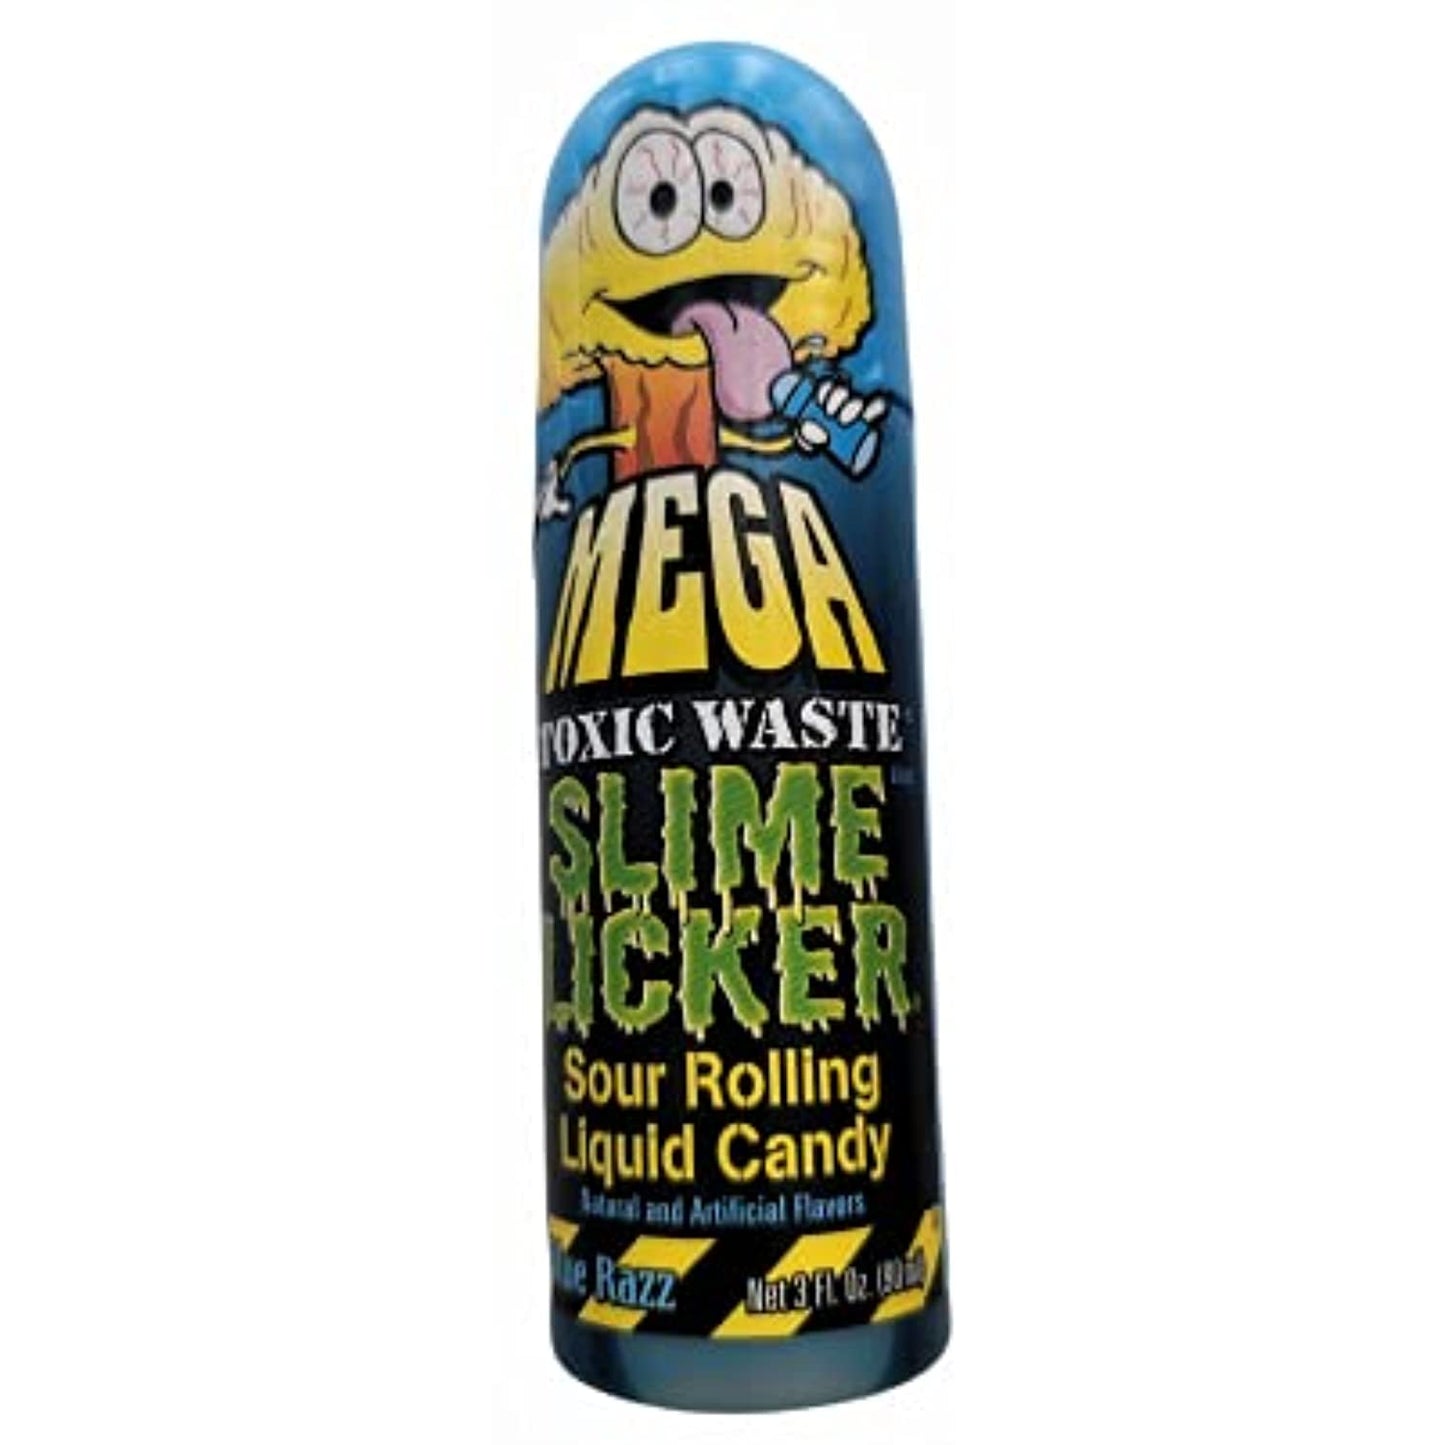 Mega Toxic Waste Slime Licker Sour Rolling Liquid Candy Blue Razz Flavo 3 Fl Oz